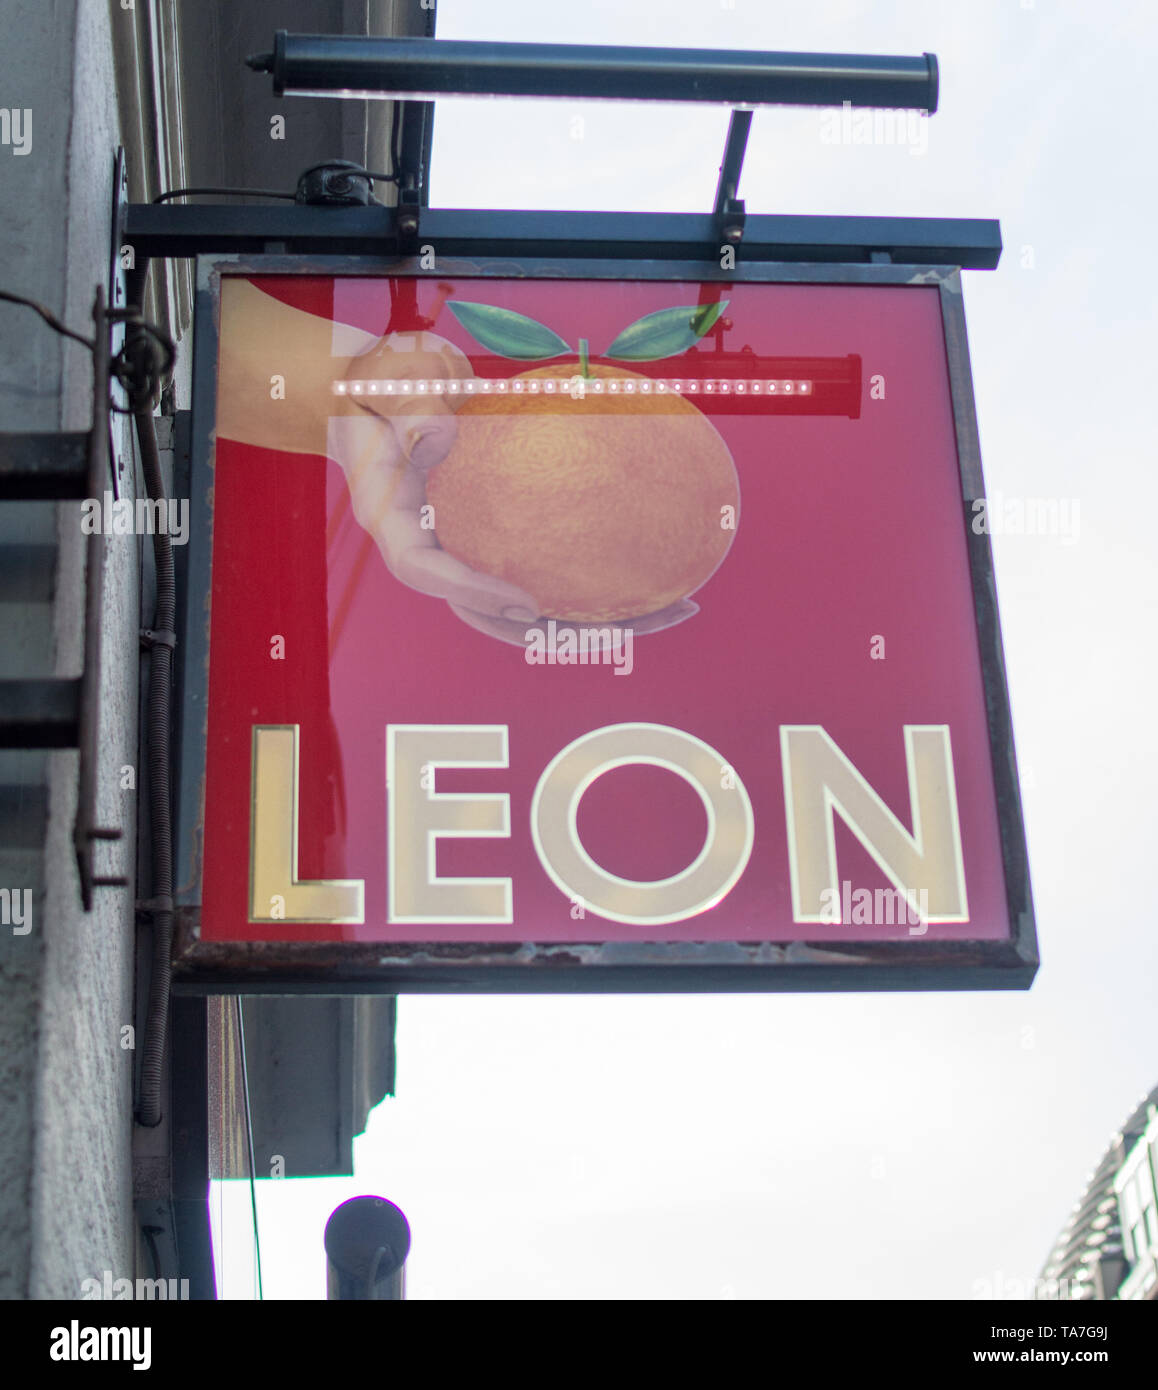 Leon restaurant, London, UK Stock Photo